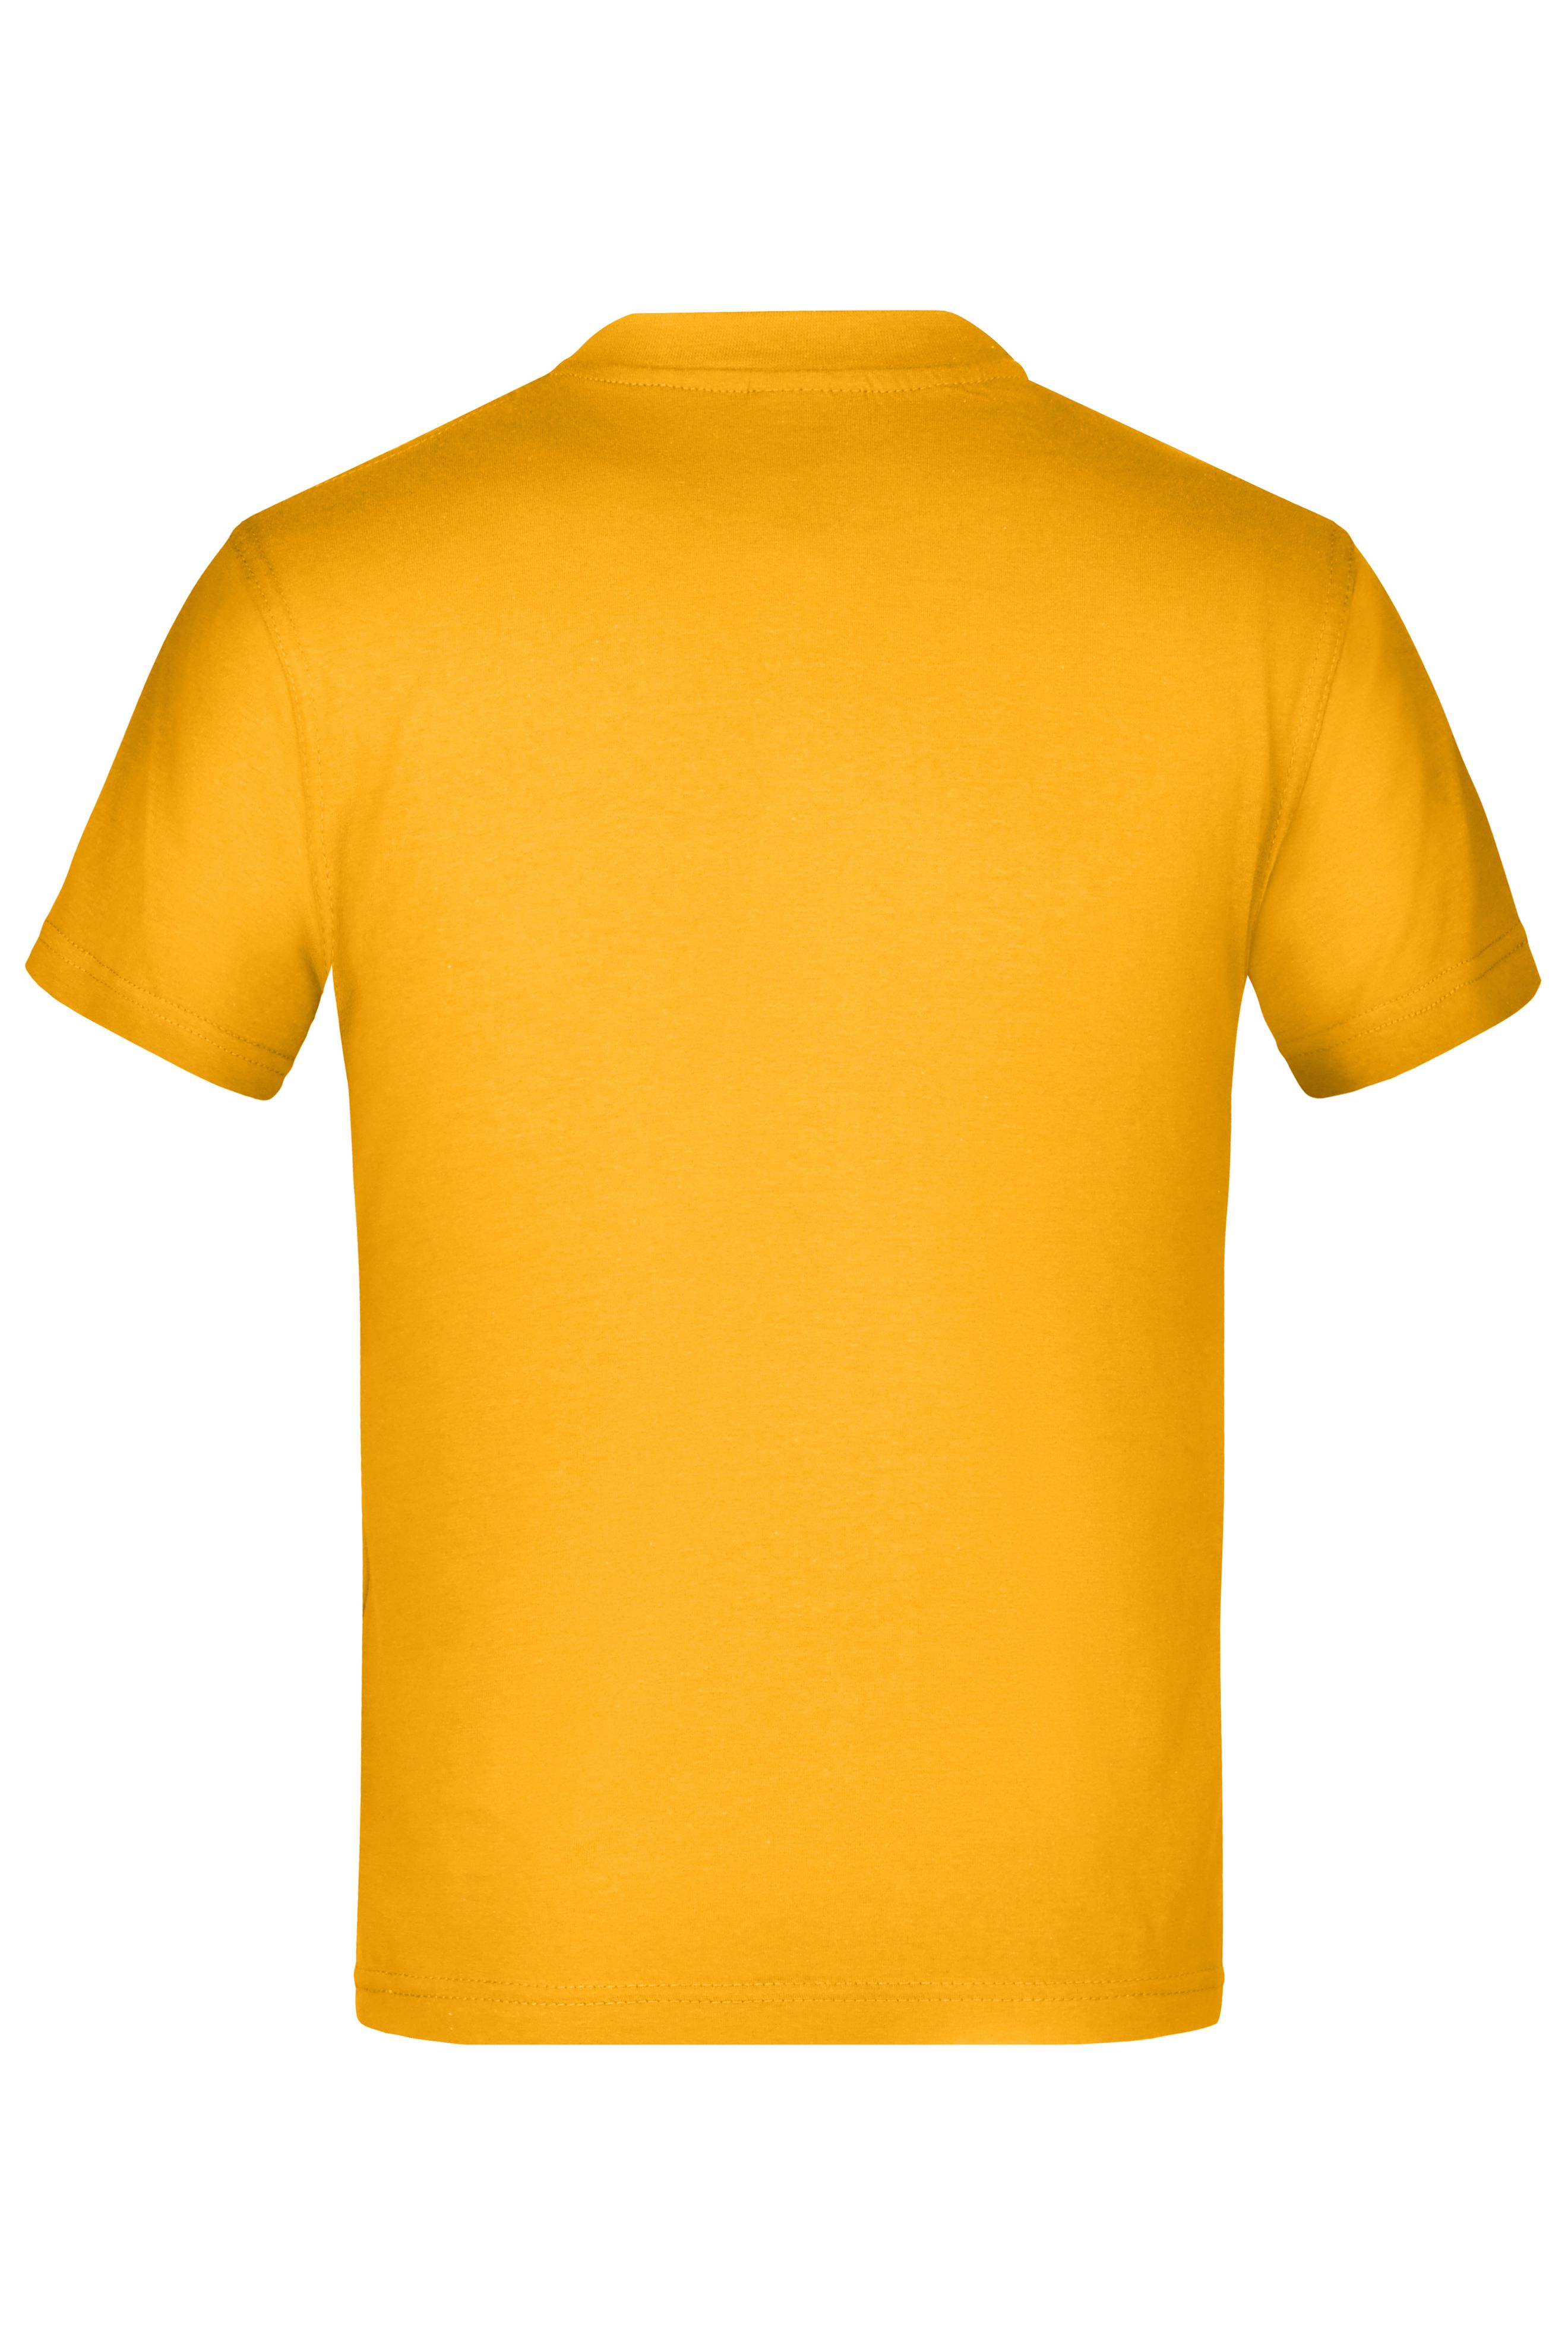 Junior Basic-T JN019 Kinder Komfort-T-Shirt aus hochwertigem Single-Jersey